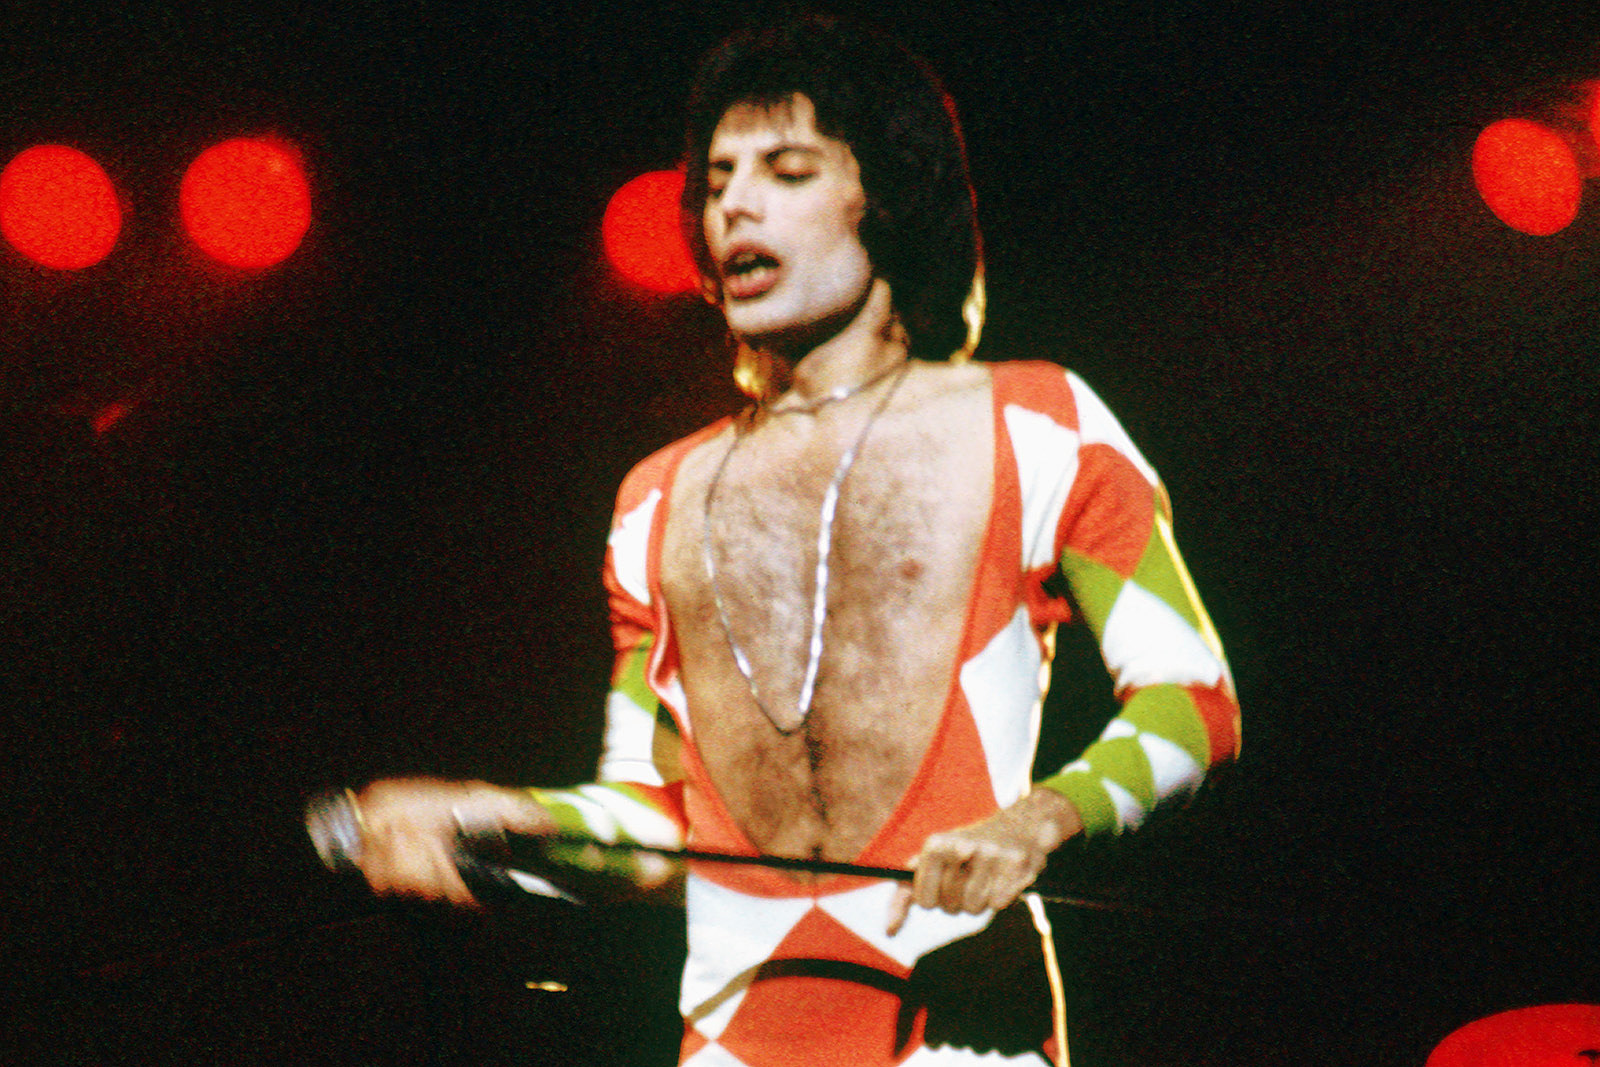 Freddie Mercury Told Biographer He Felt 'Imprisoned' by Fame